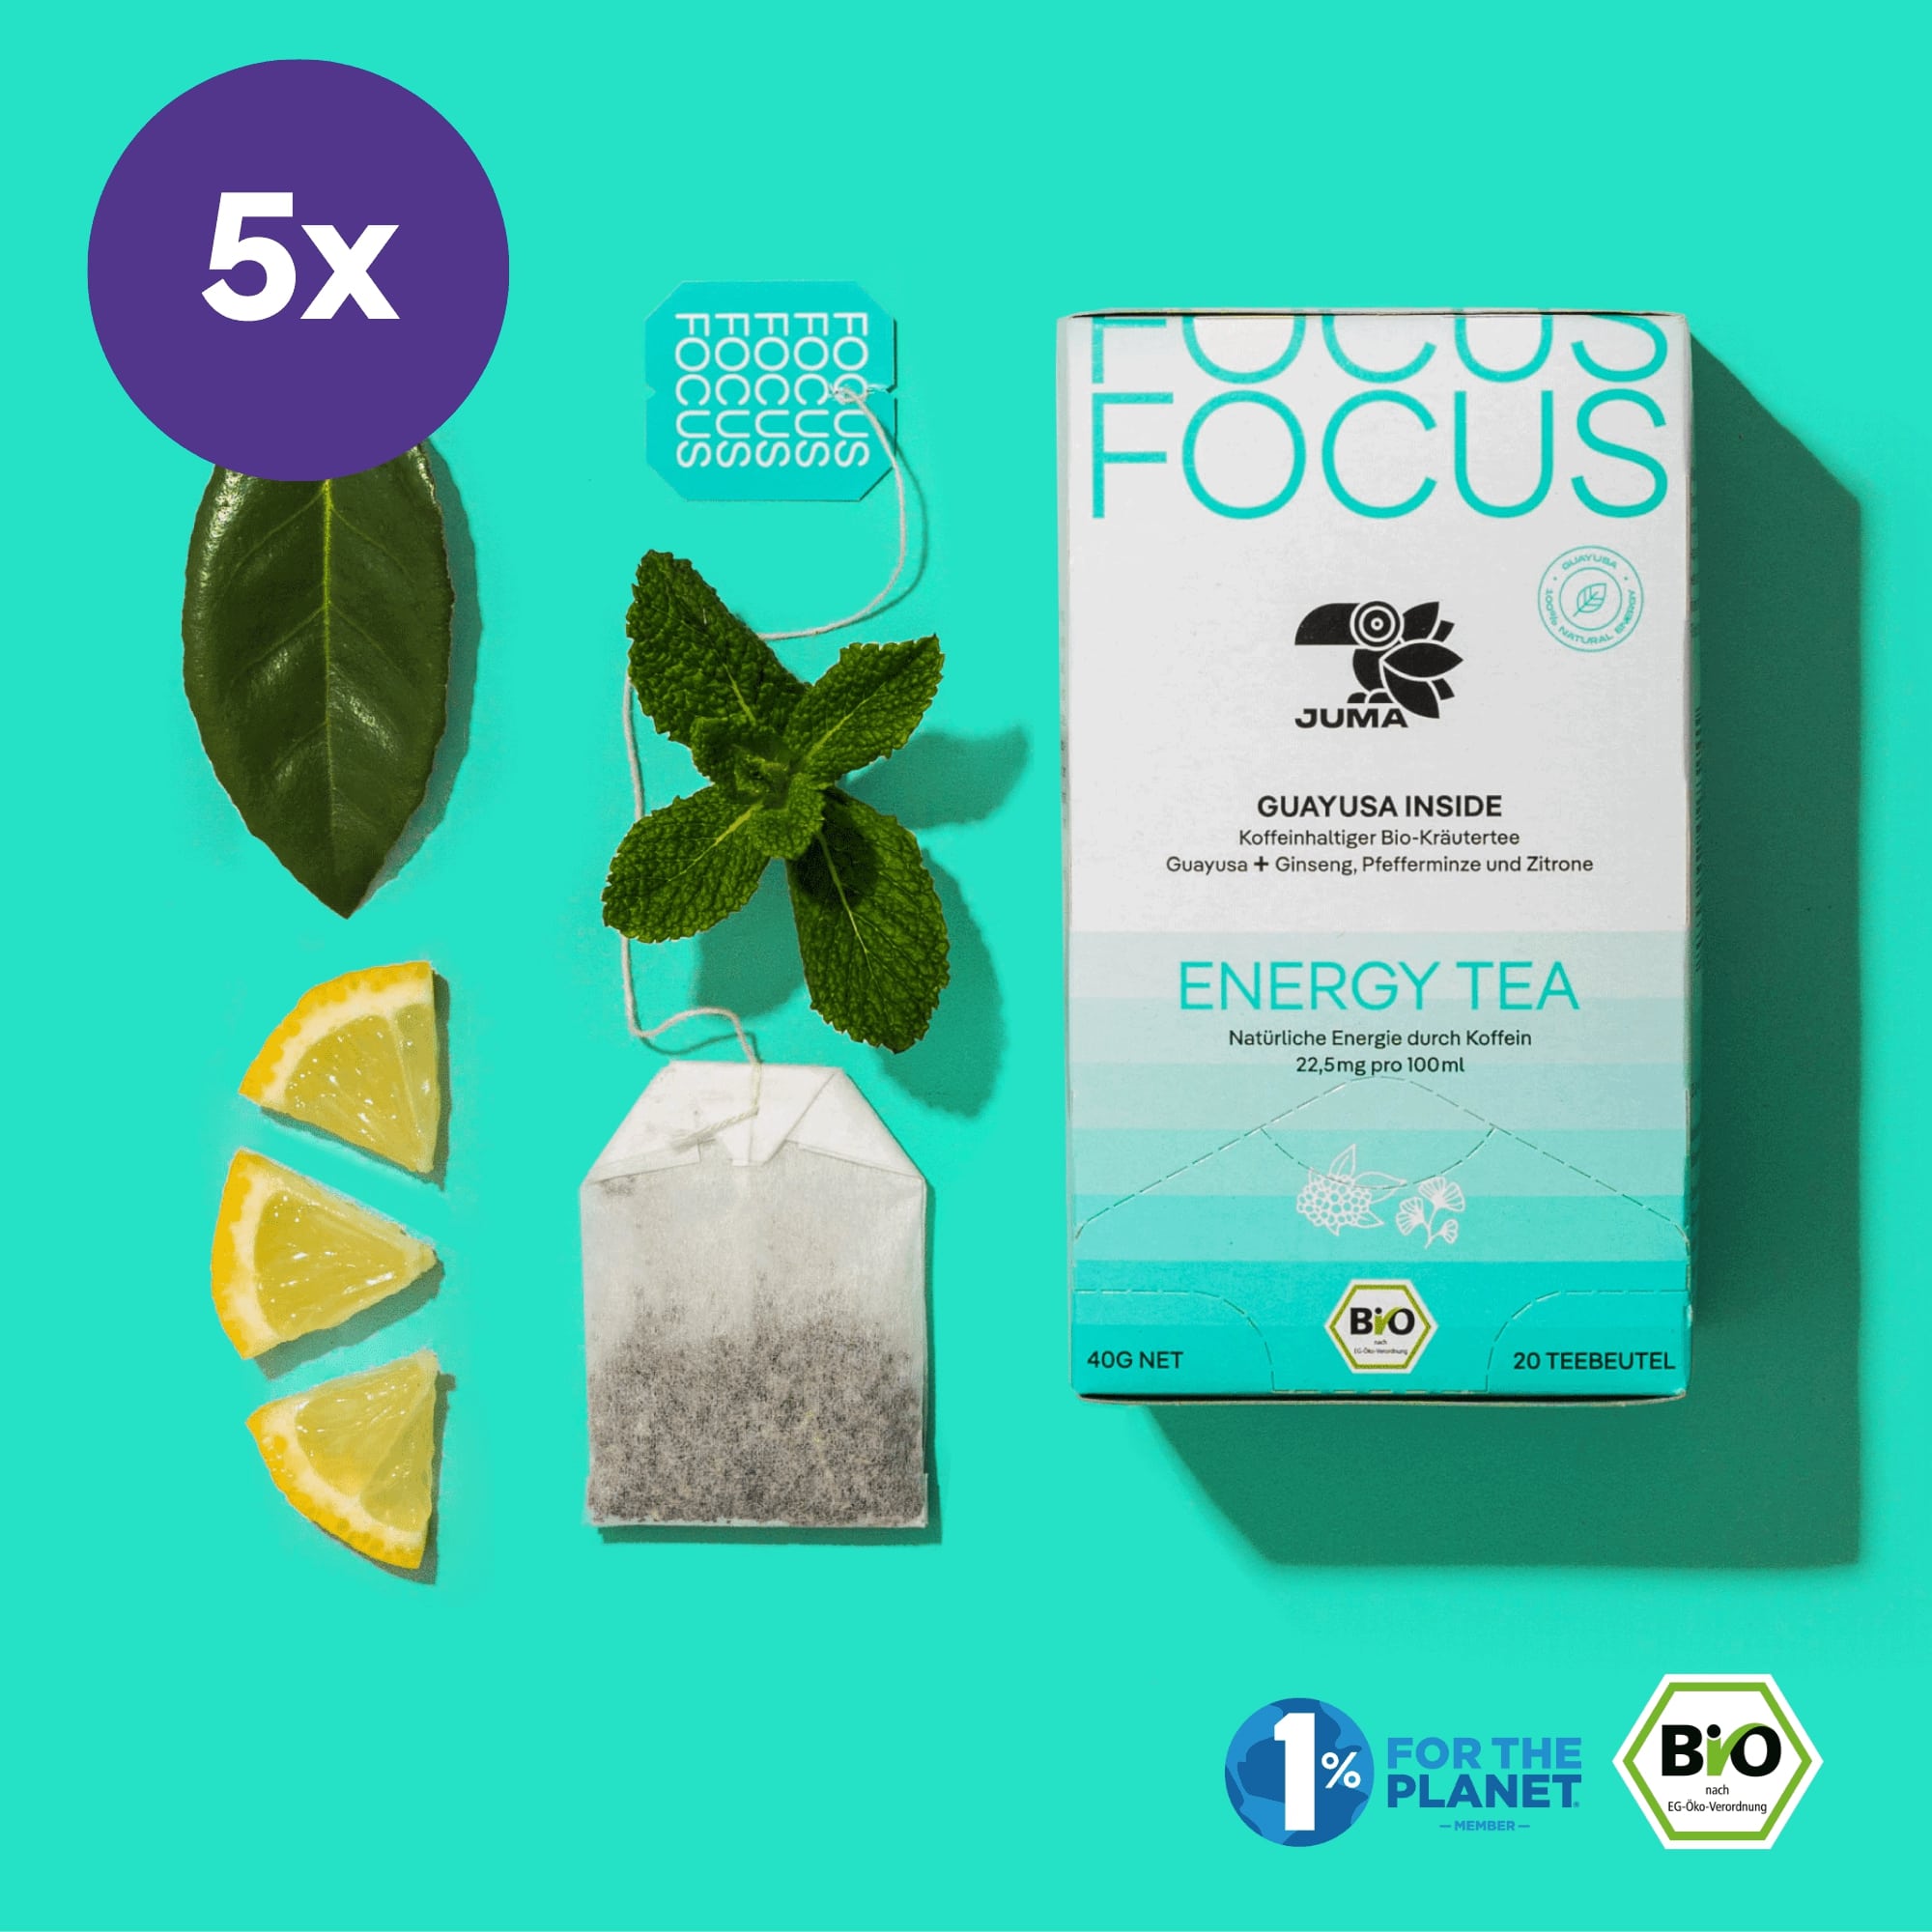 hot energy tea focus guayusa